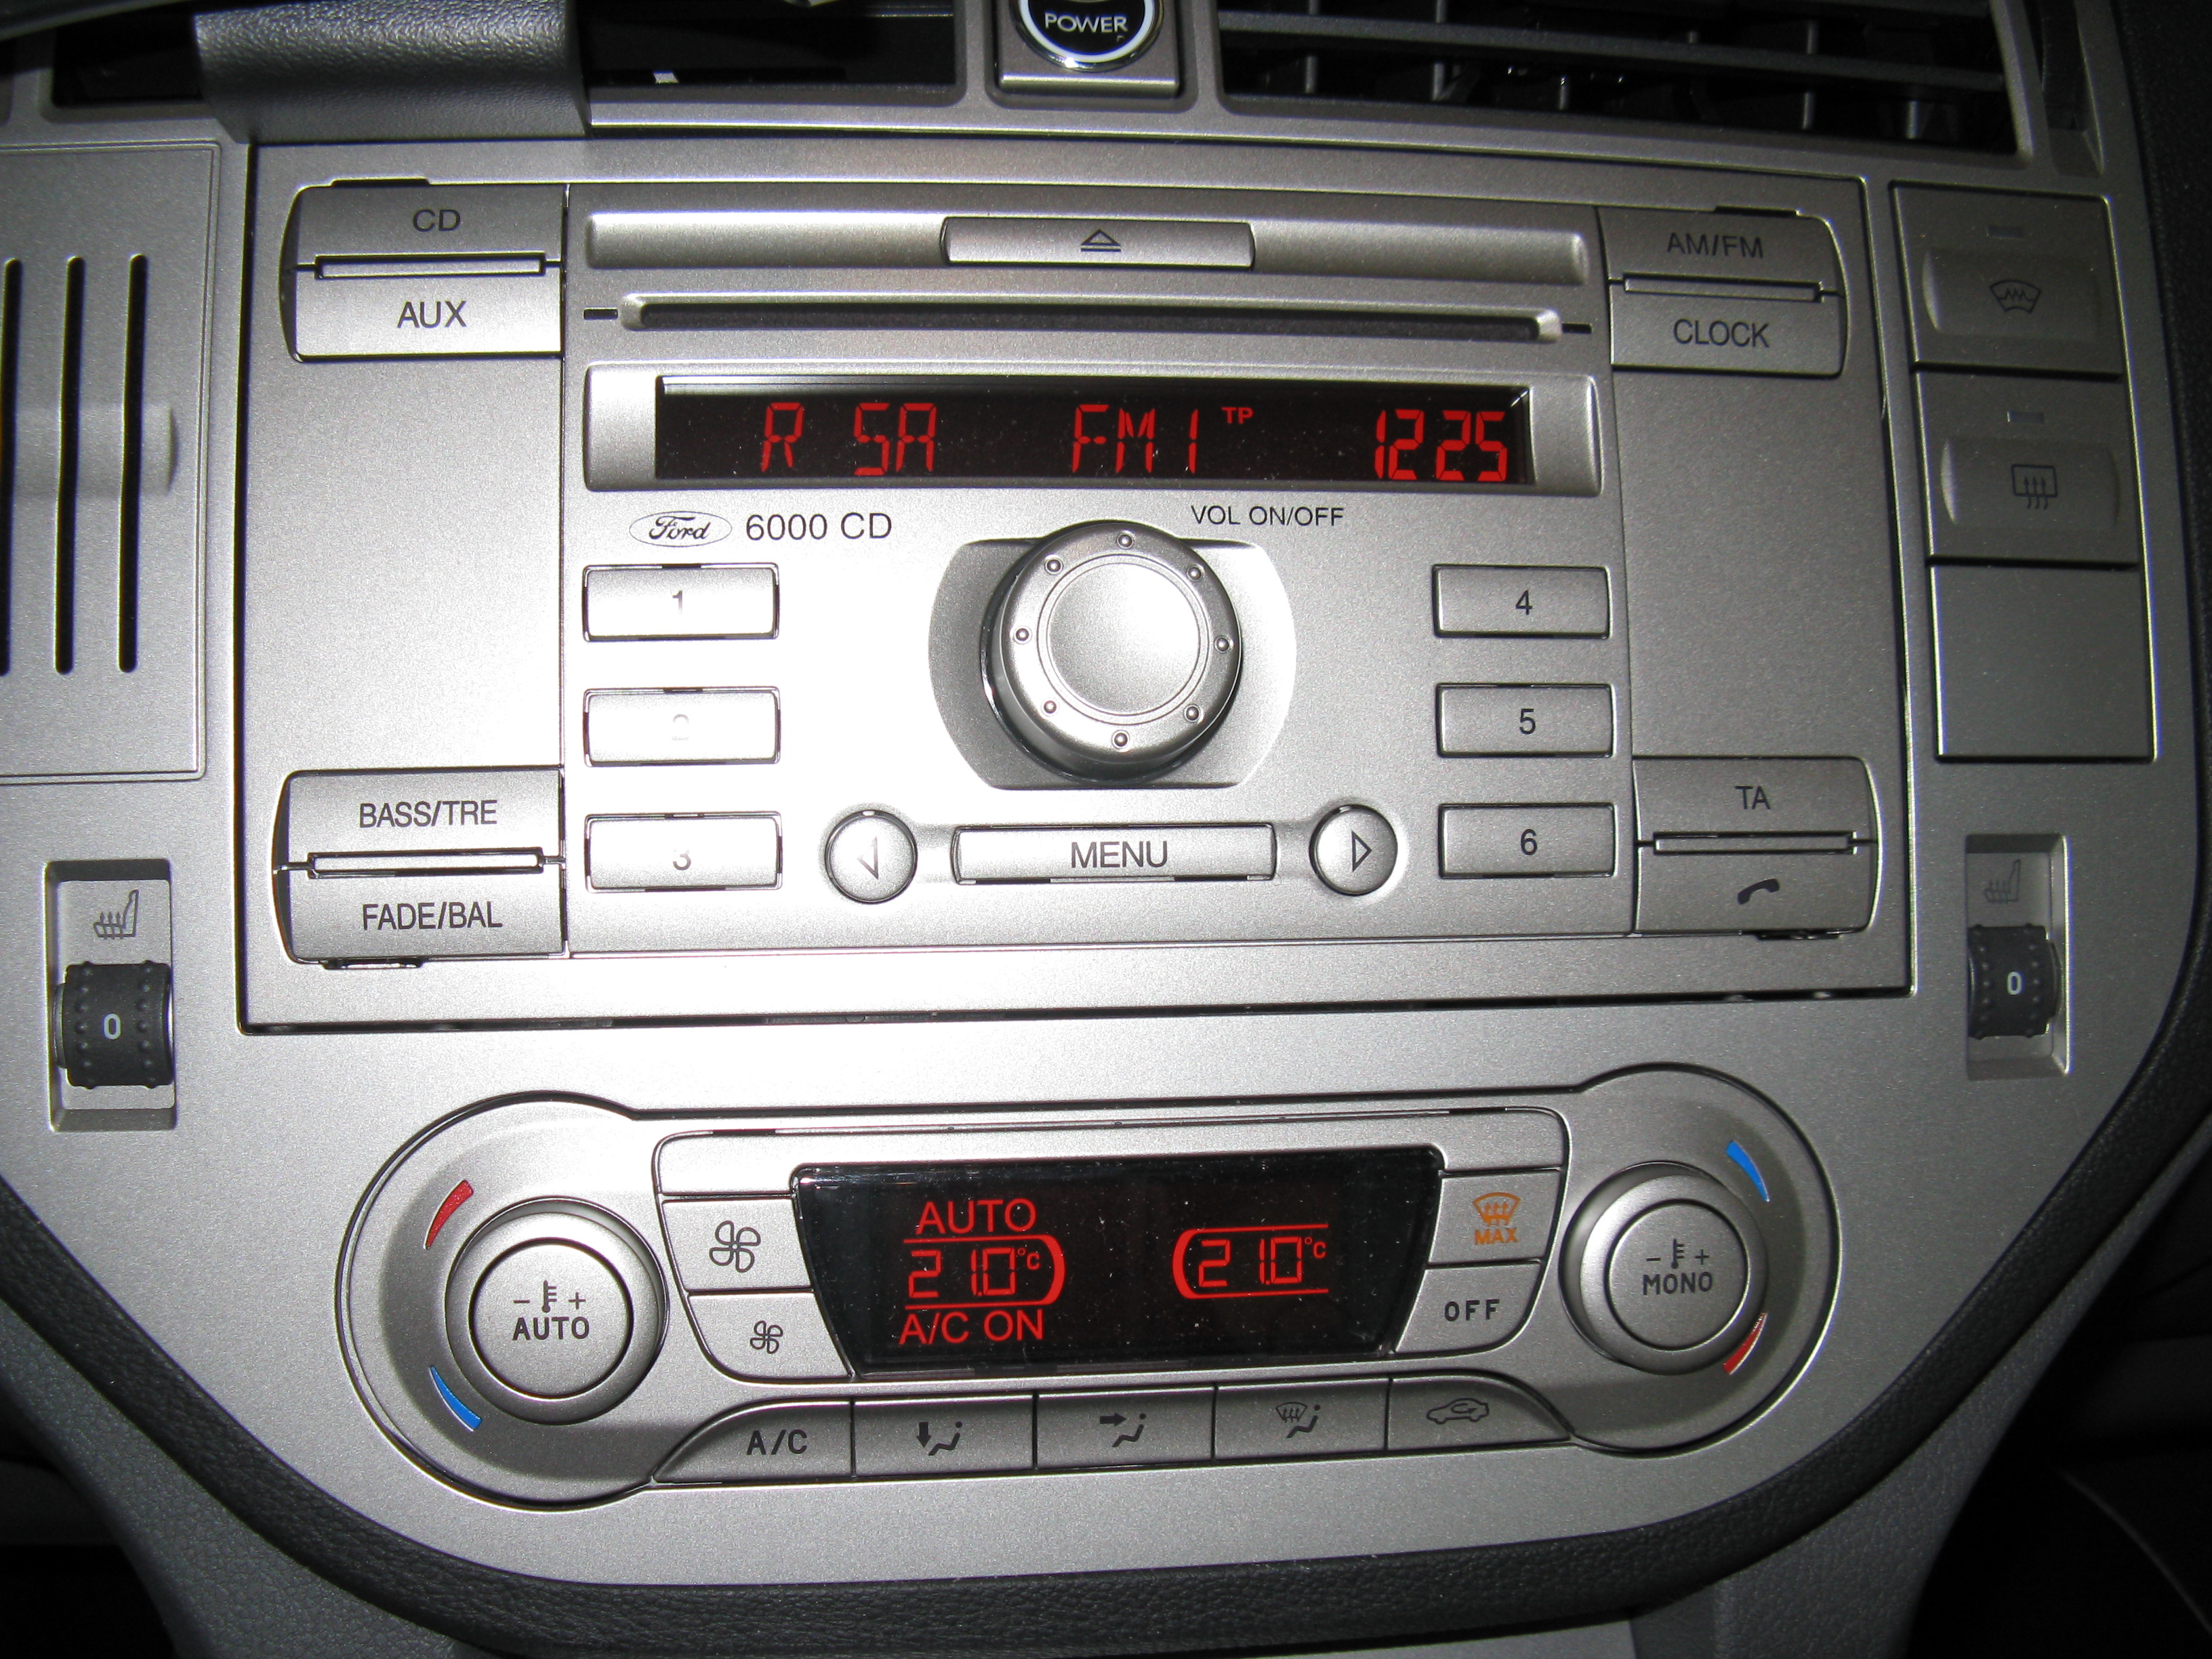 Ford audiosystem 6000cd anschlsse #9